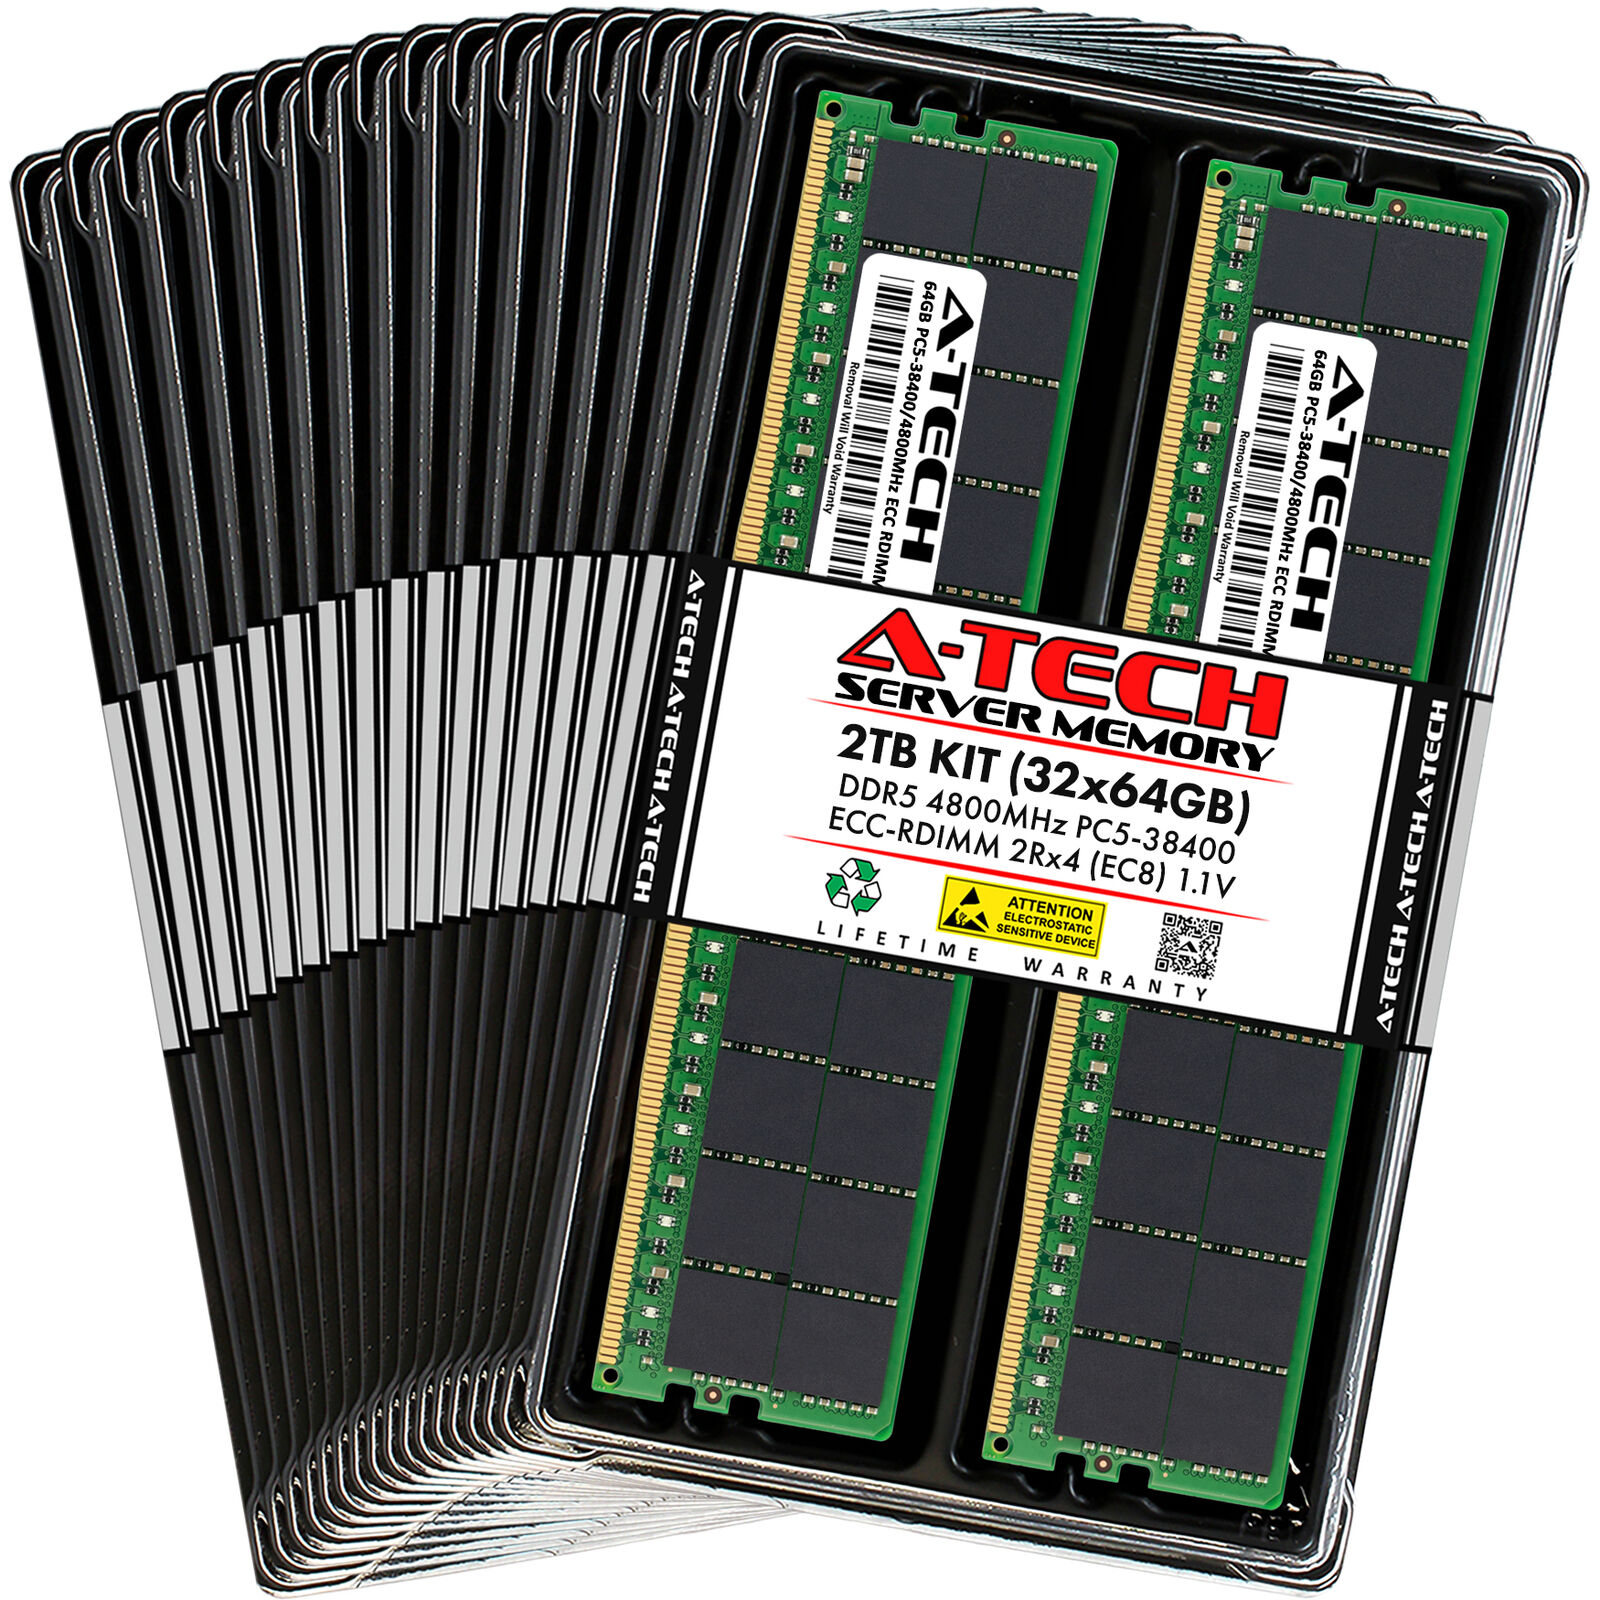 2TB 32x64GB PC5-4800 EC8 RDIMM HP ProLiant DL360 G11 Memory RAM